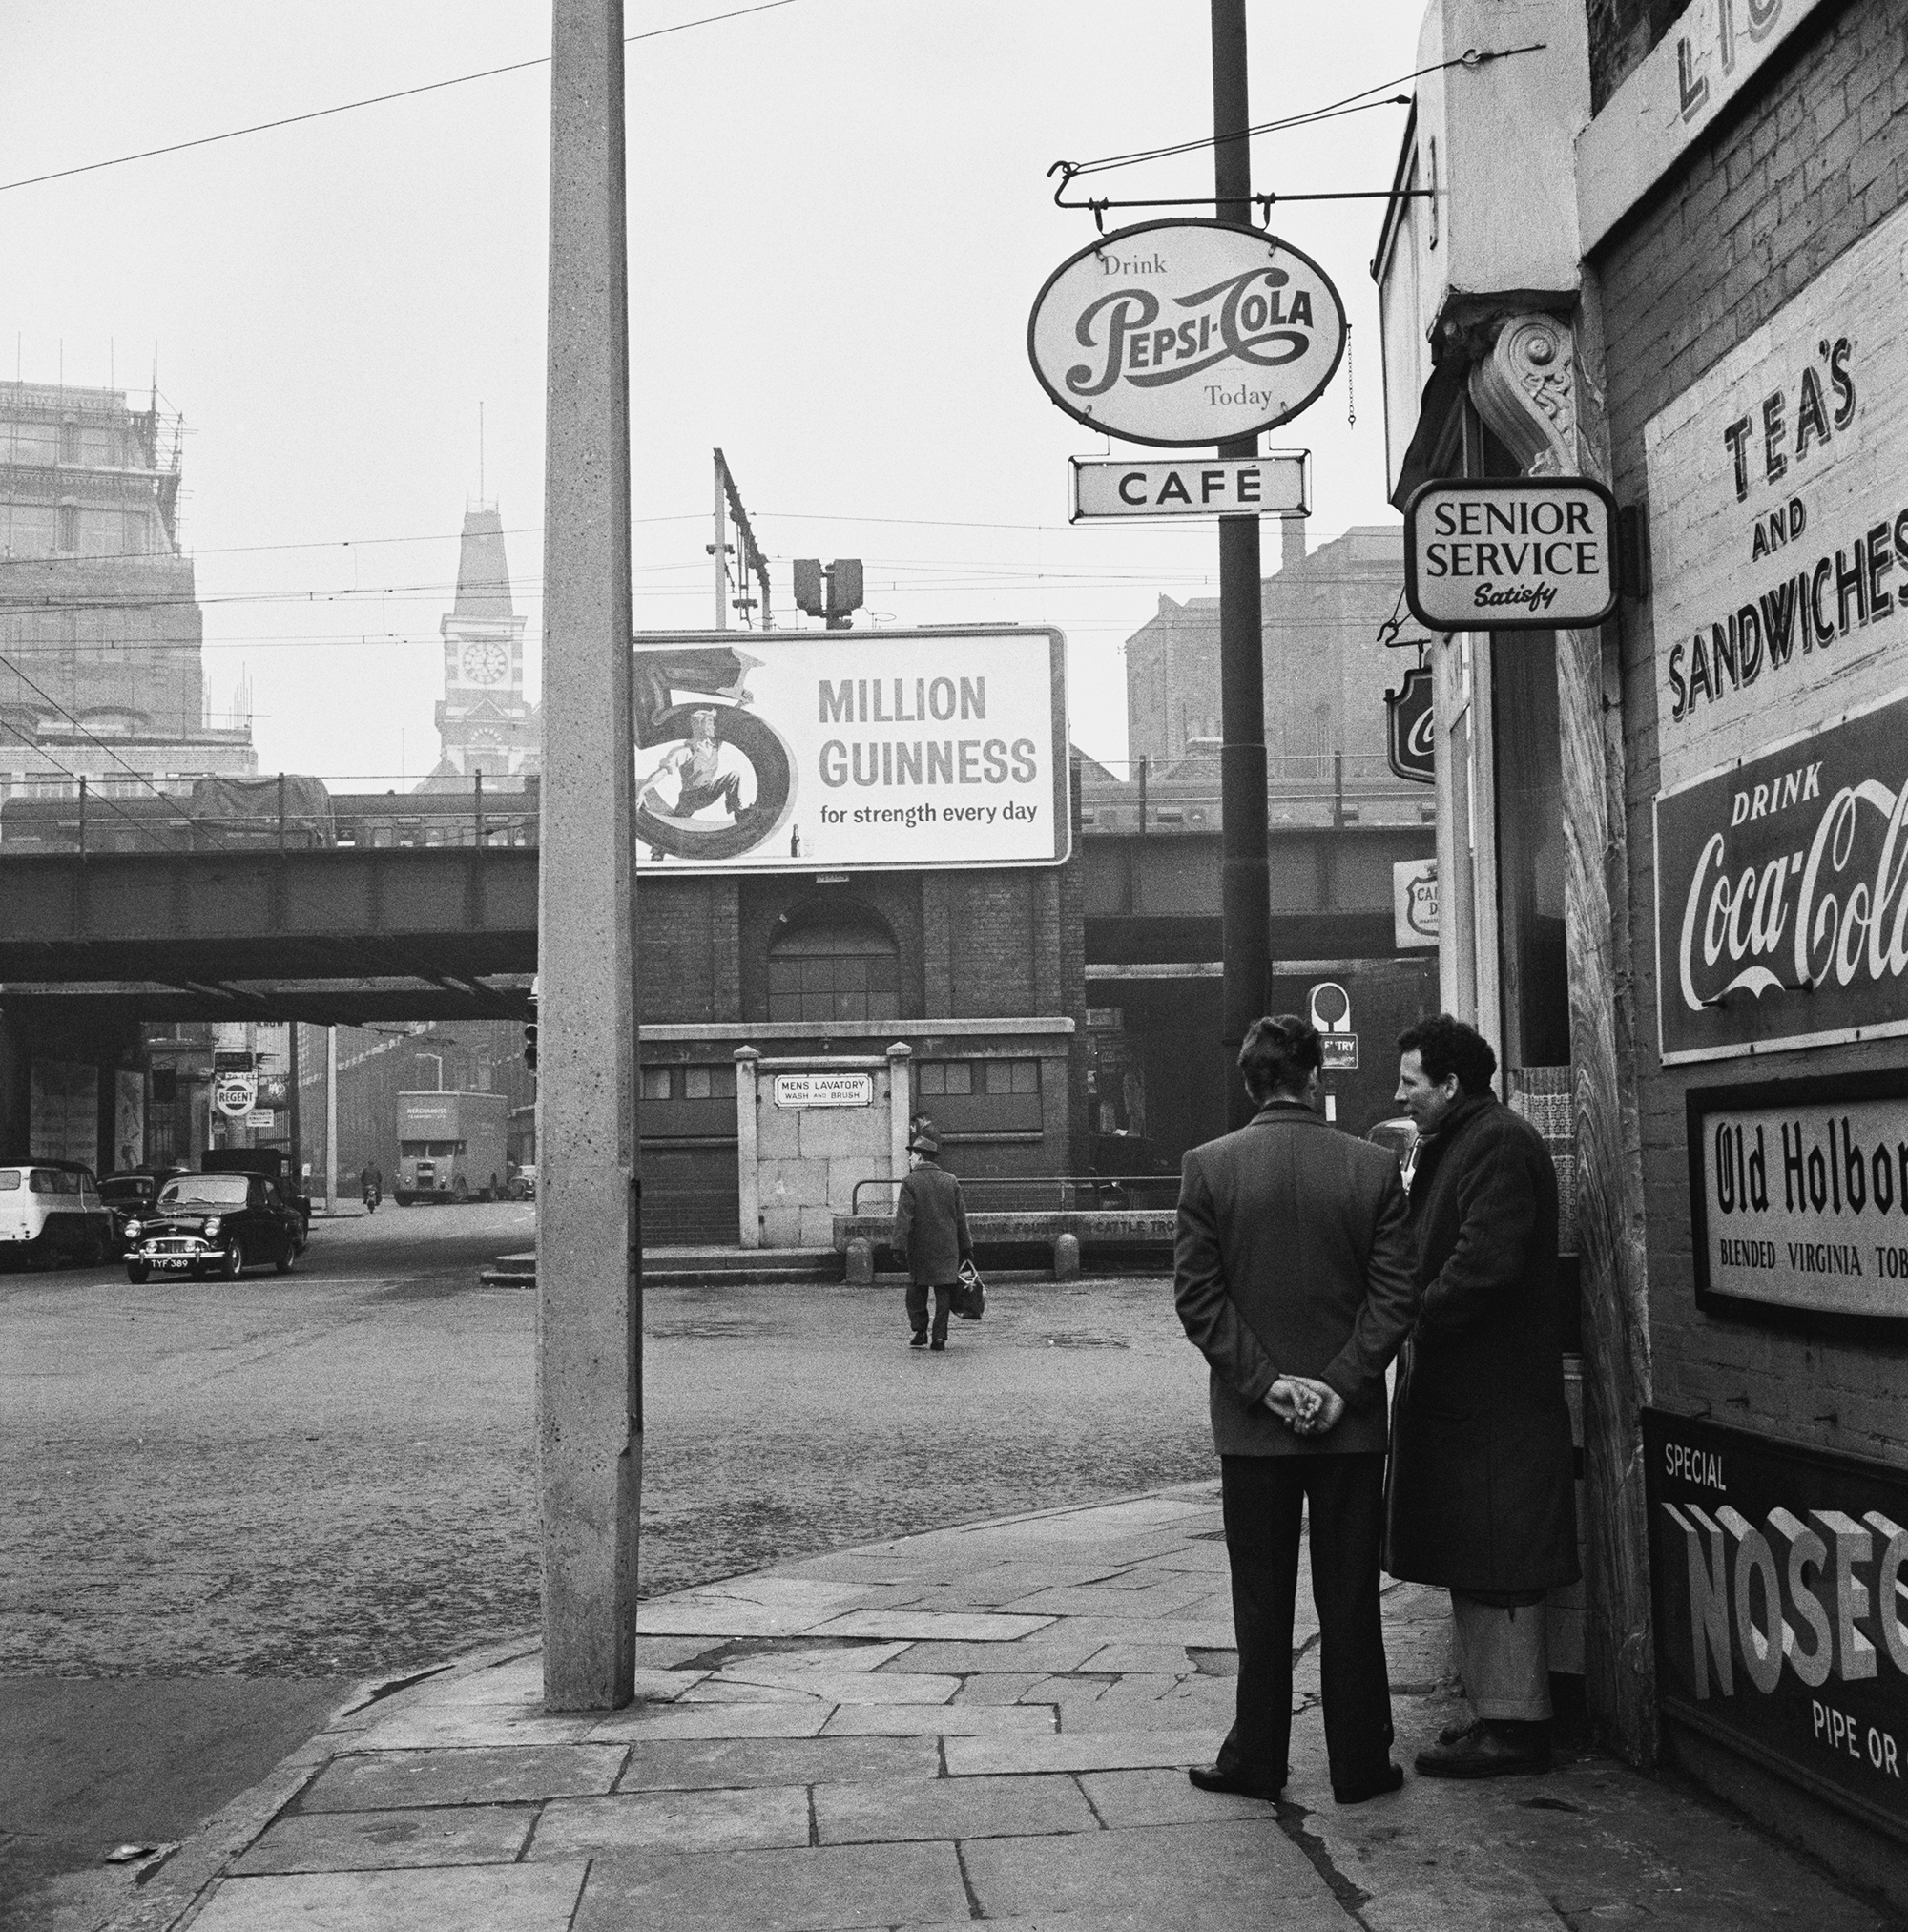 Two men stand on a street corner near advertising billboards around Brick Lane in East London, 1960.